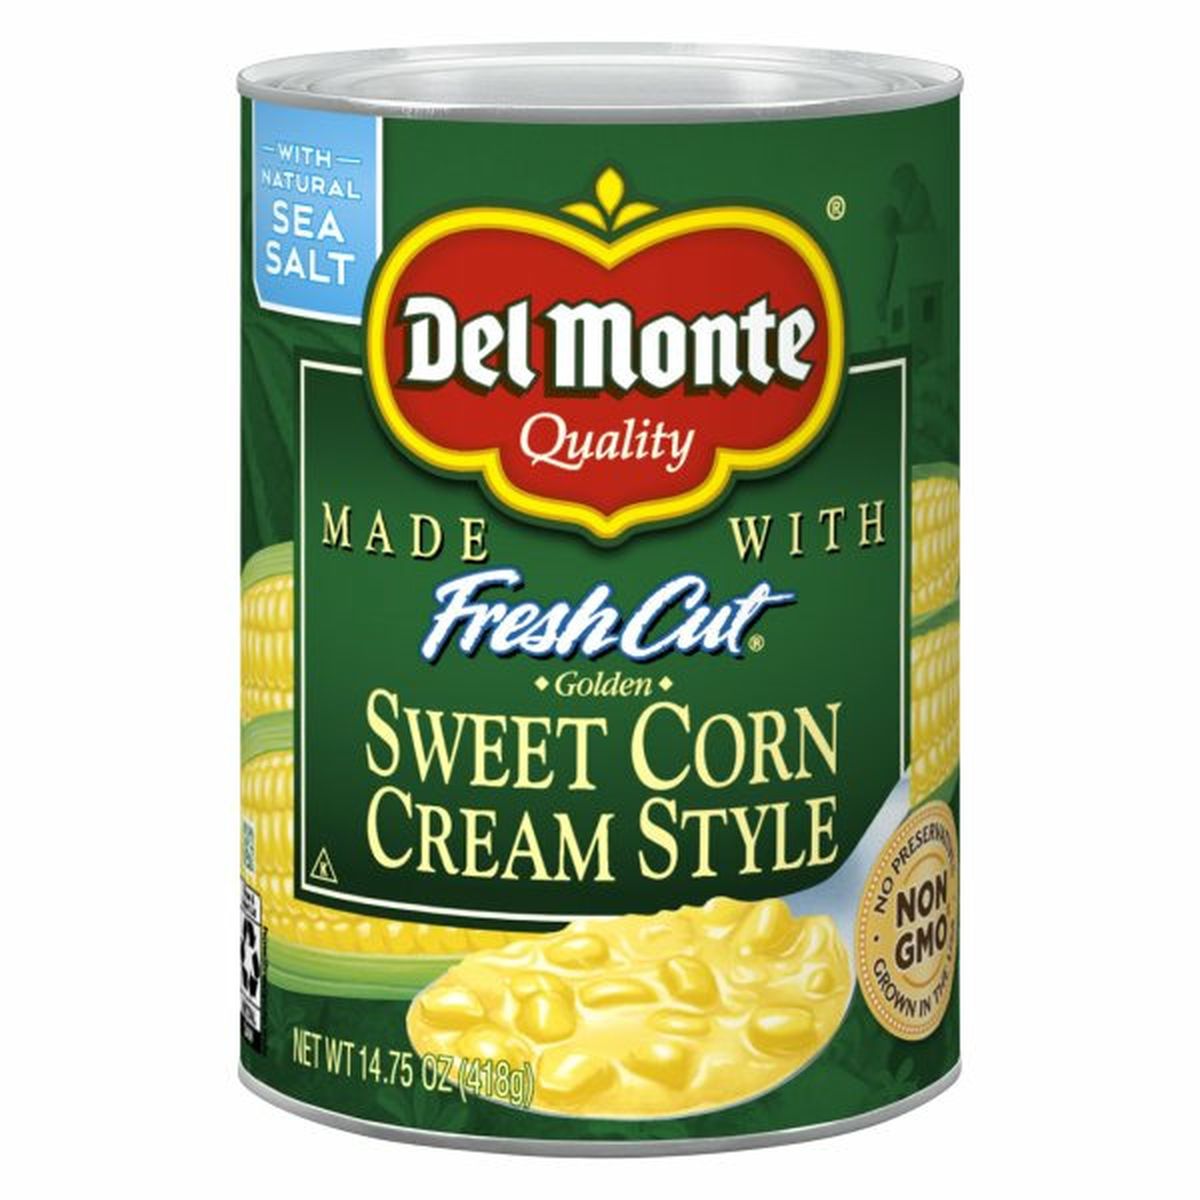 Calories in Del Monte Fresh Cut Sweet Corn, Cream Style, Golden